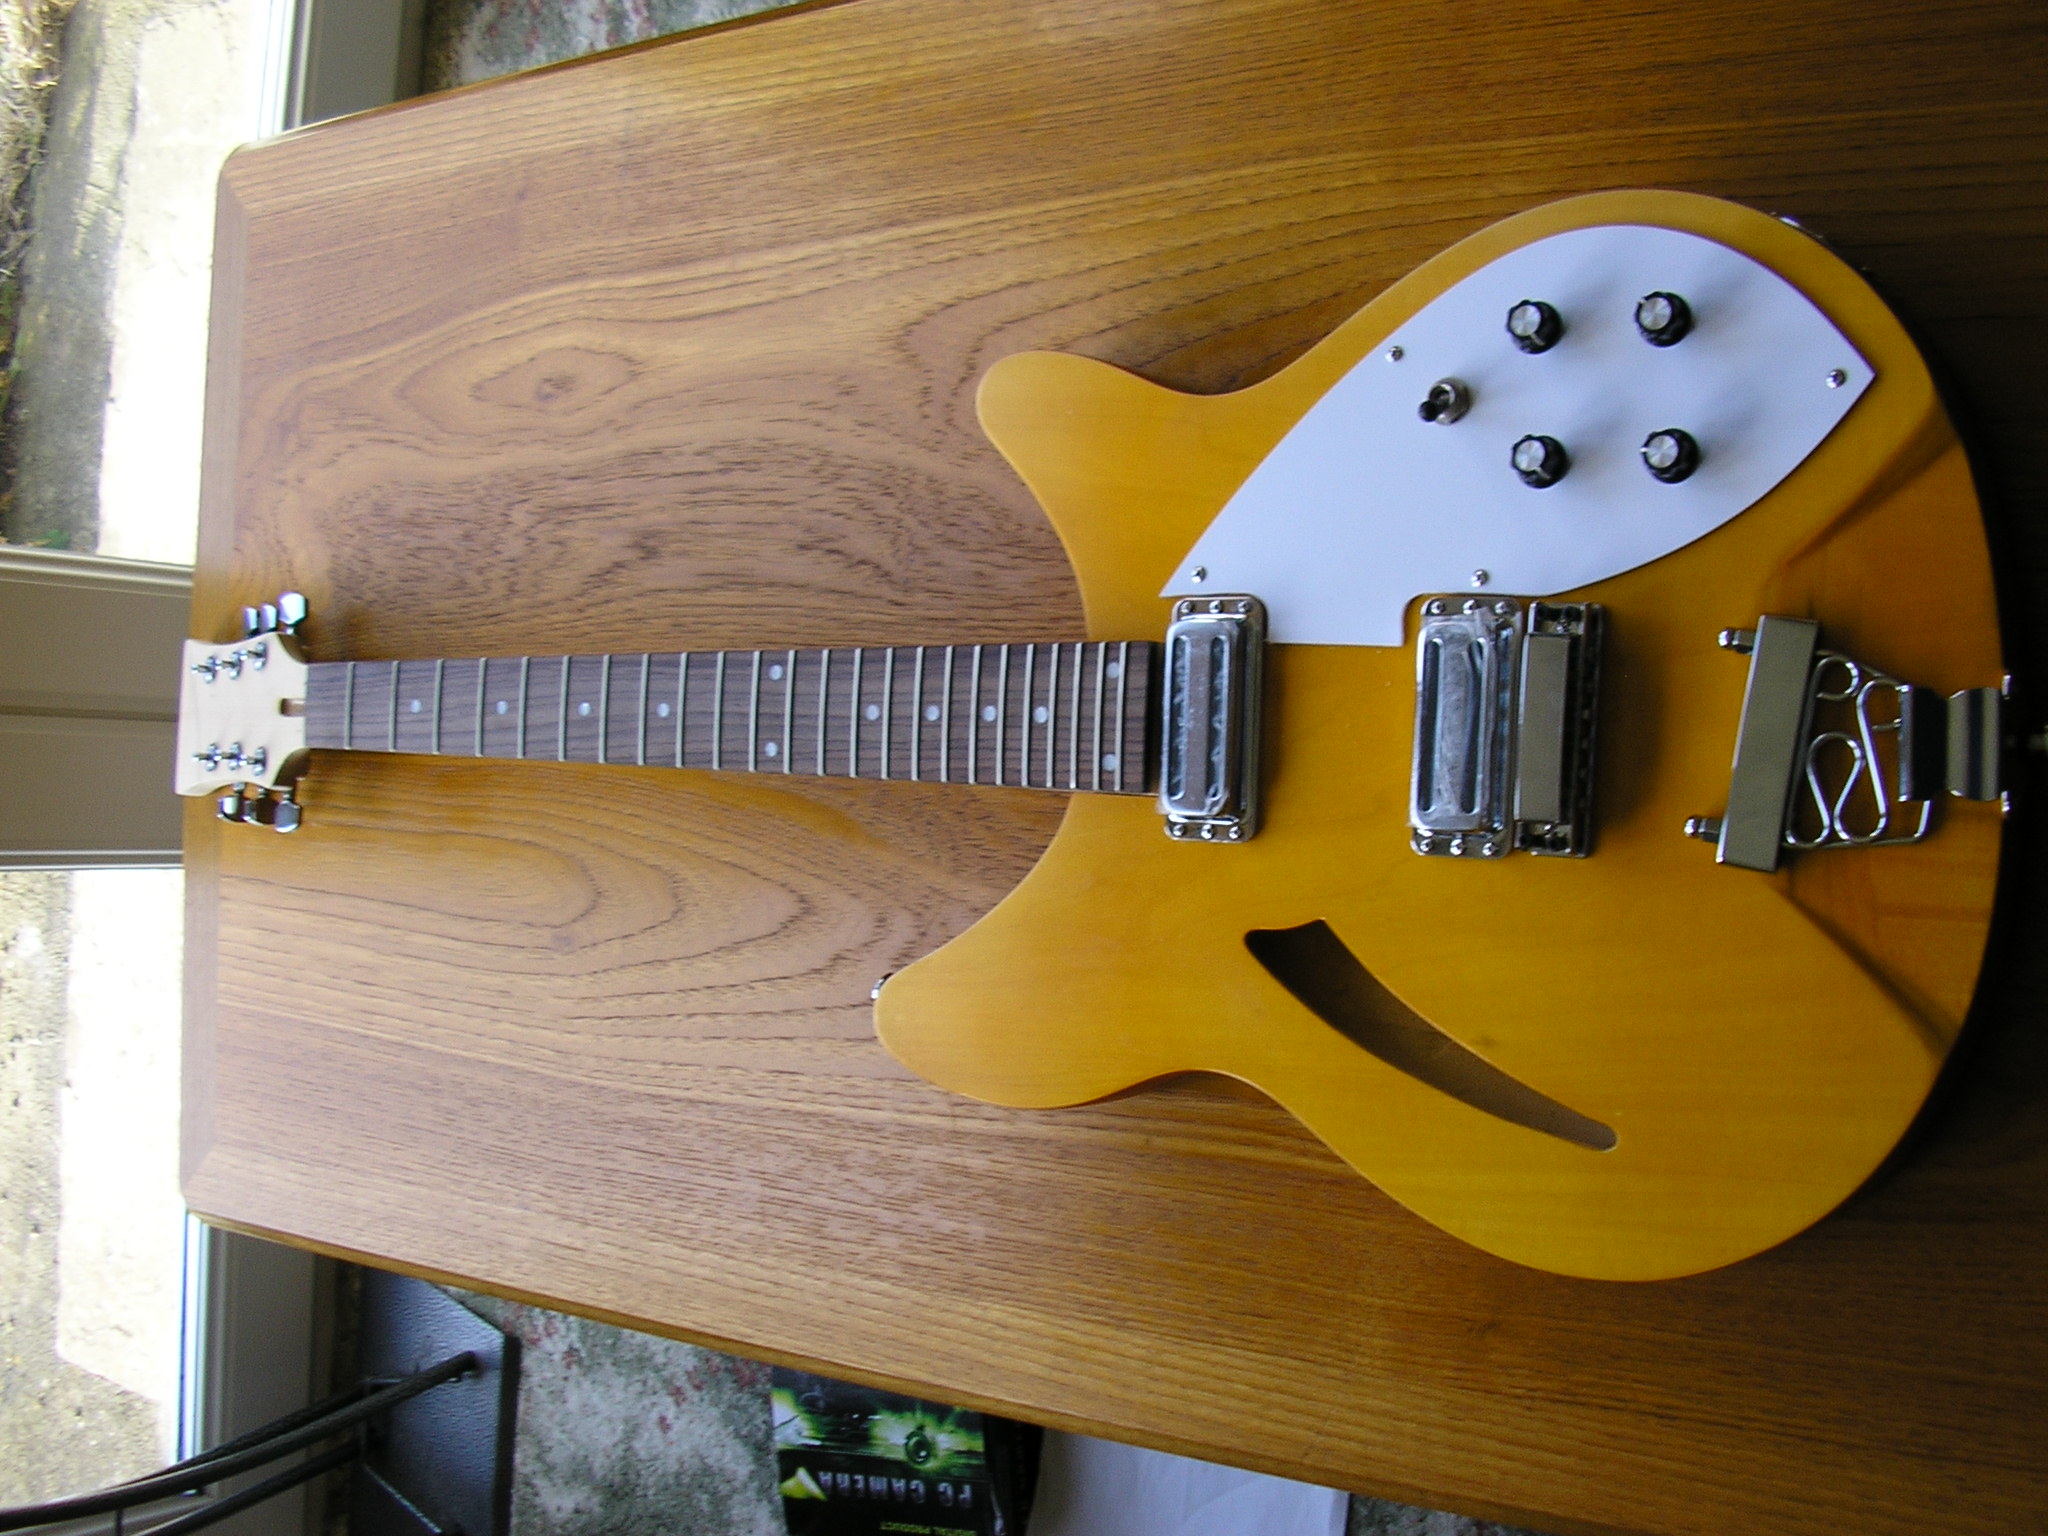 rickenbacker style guitar kit.